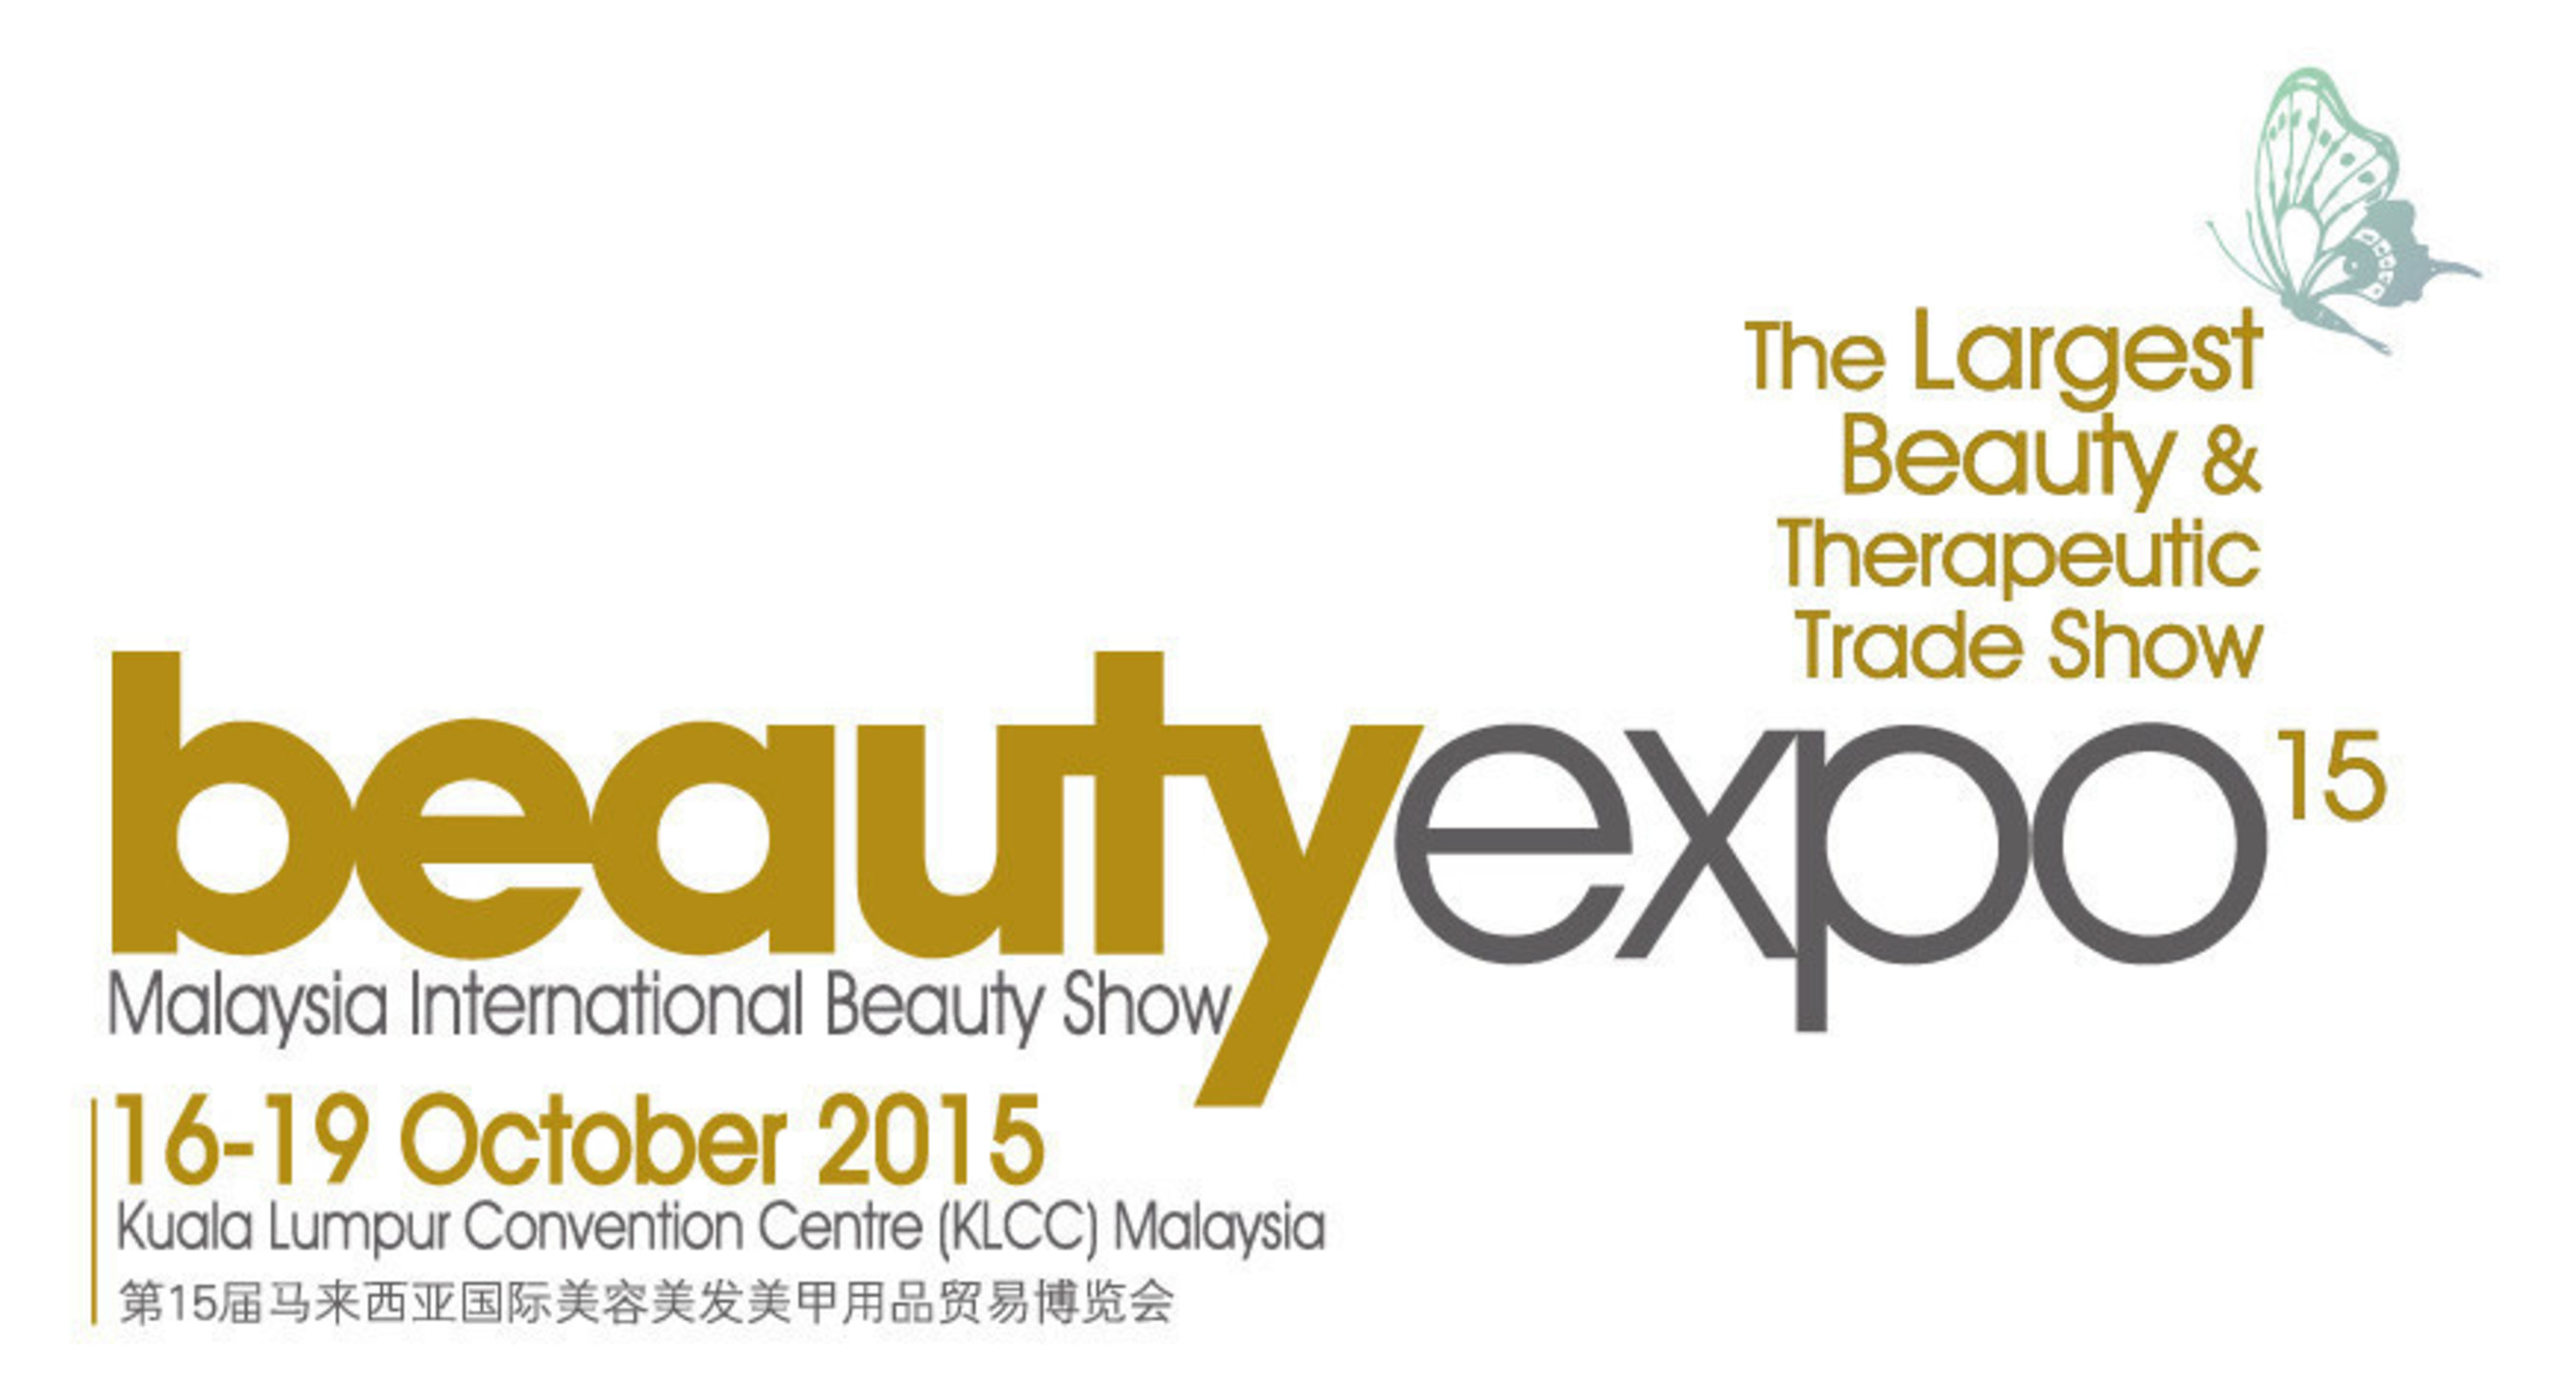 beautyexpo15 logo